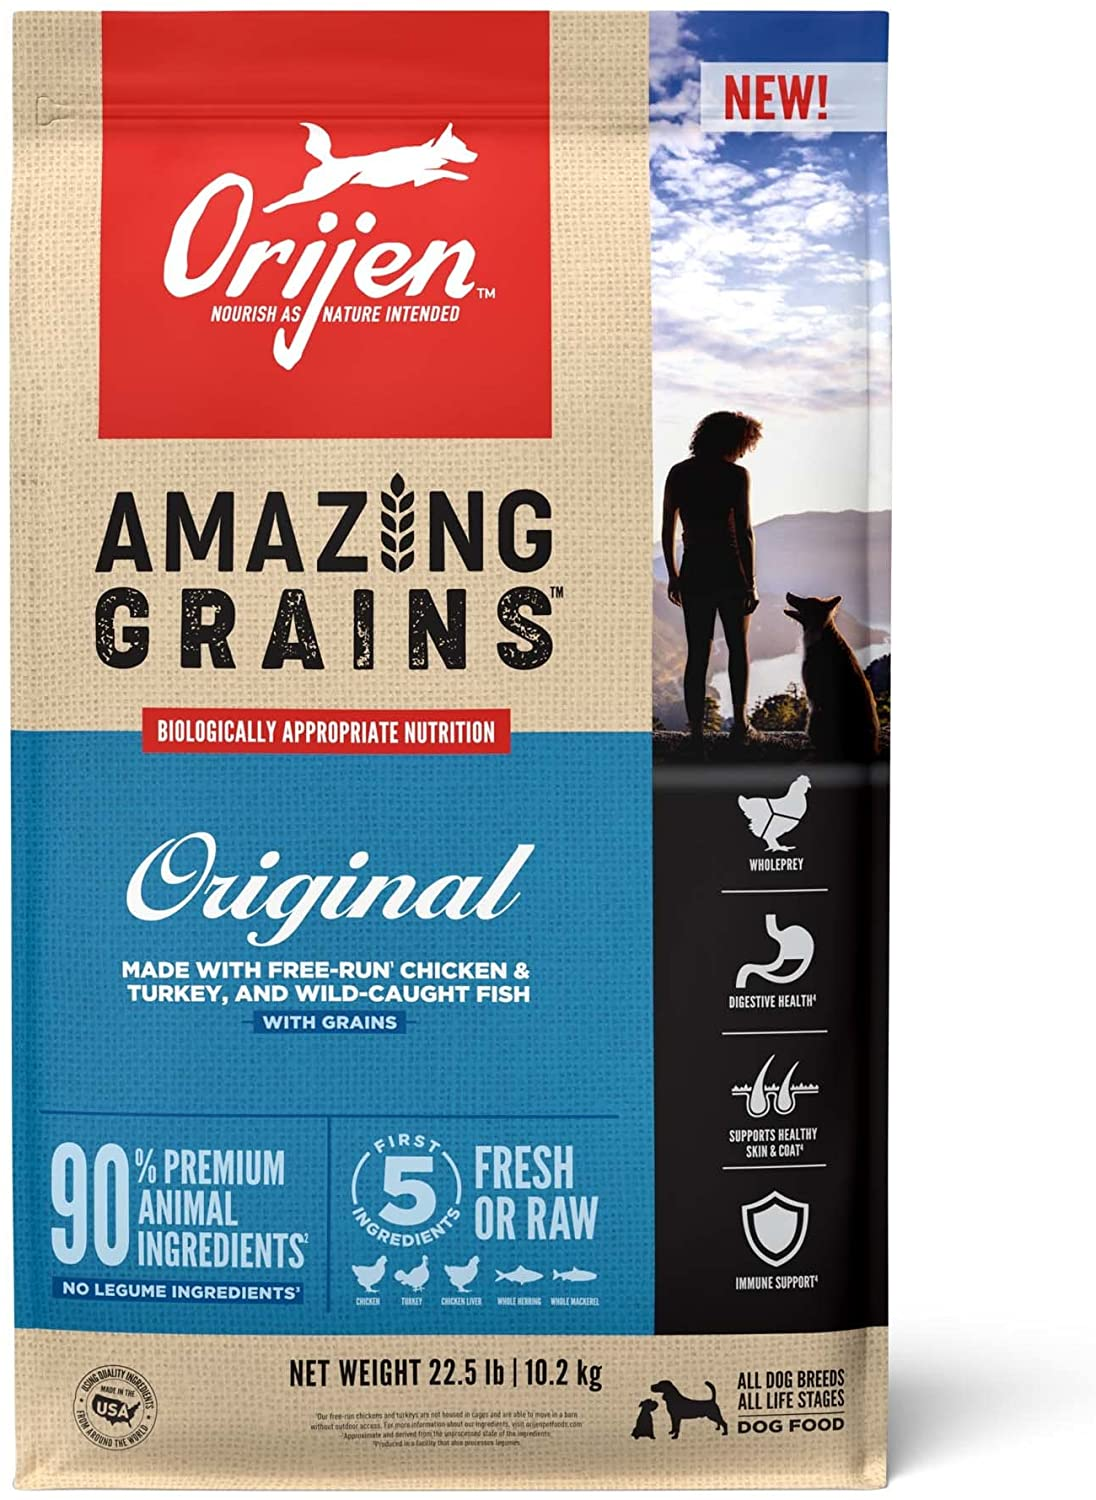 Amazon.com: ORIJEN® Dry Dog Food, High Protein, Amazing Grains Original 22.5LB : Pet Supplies $77.83